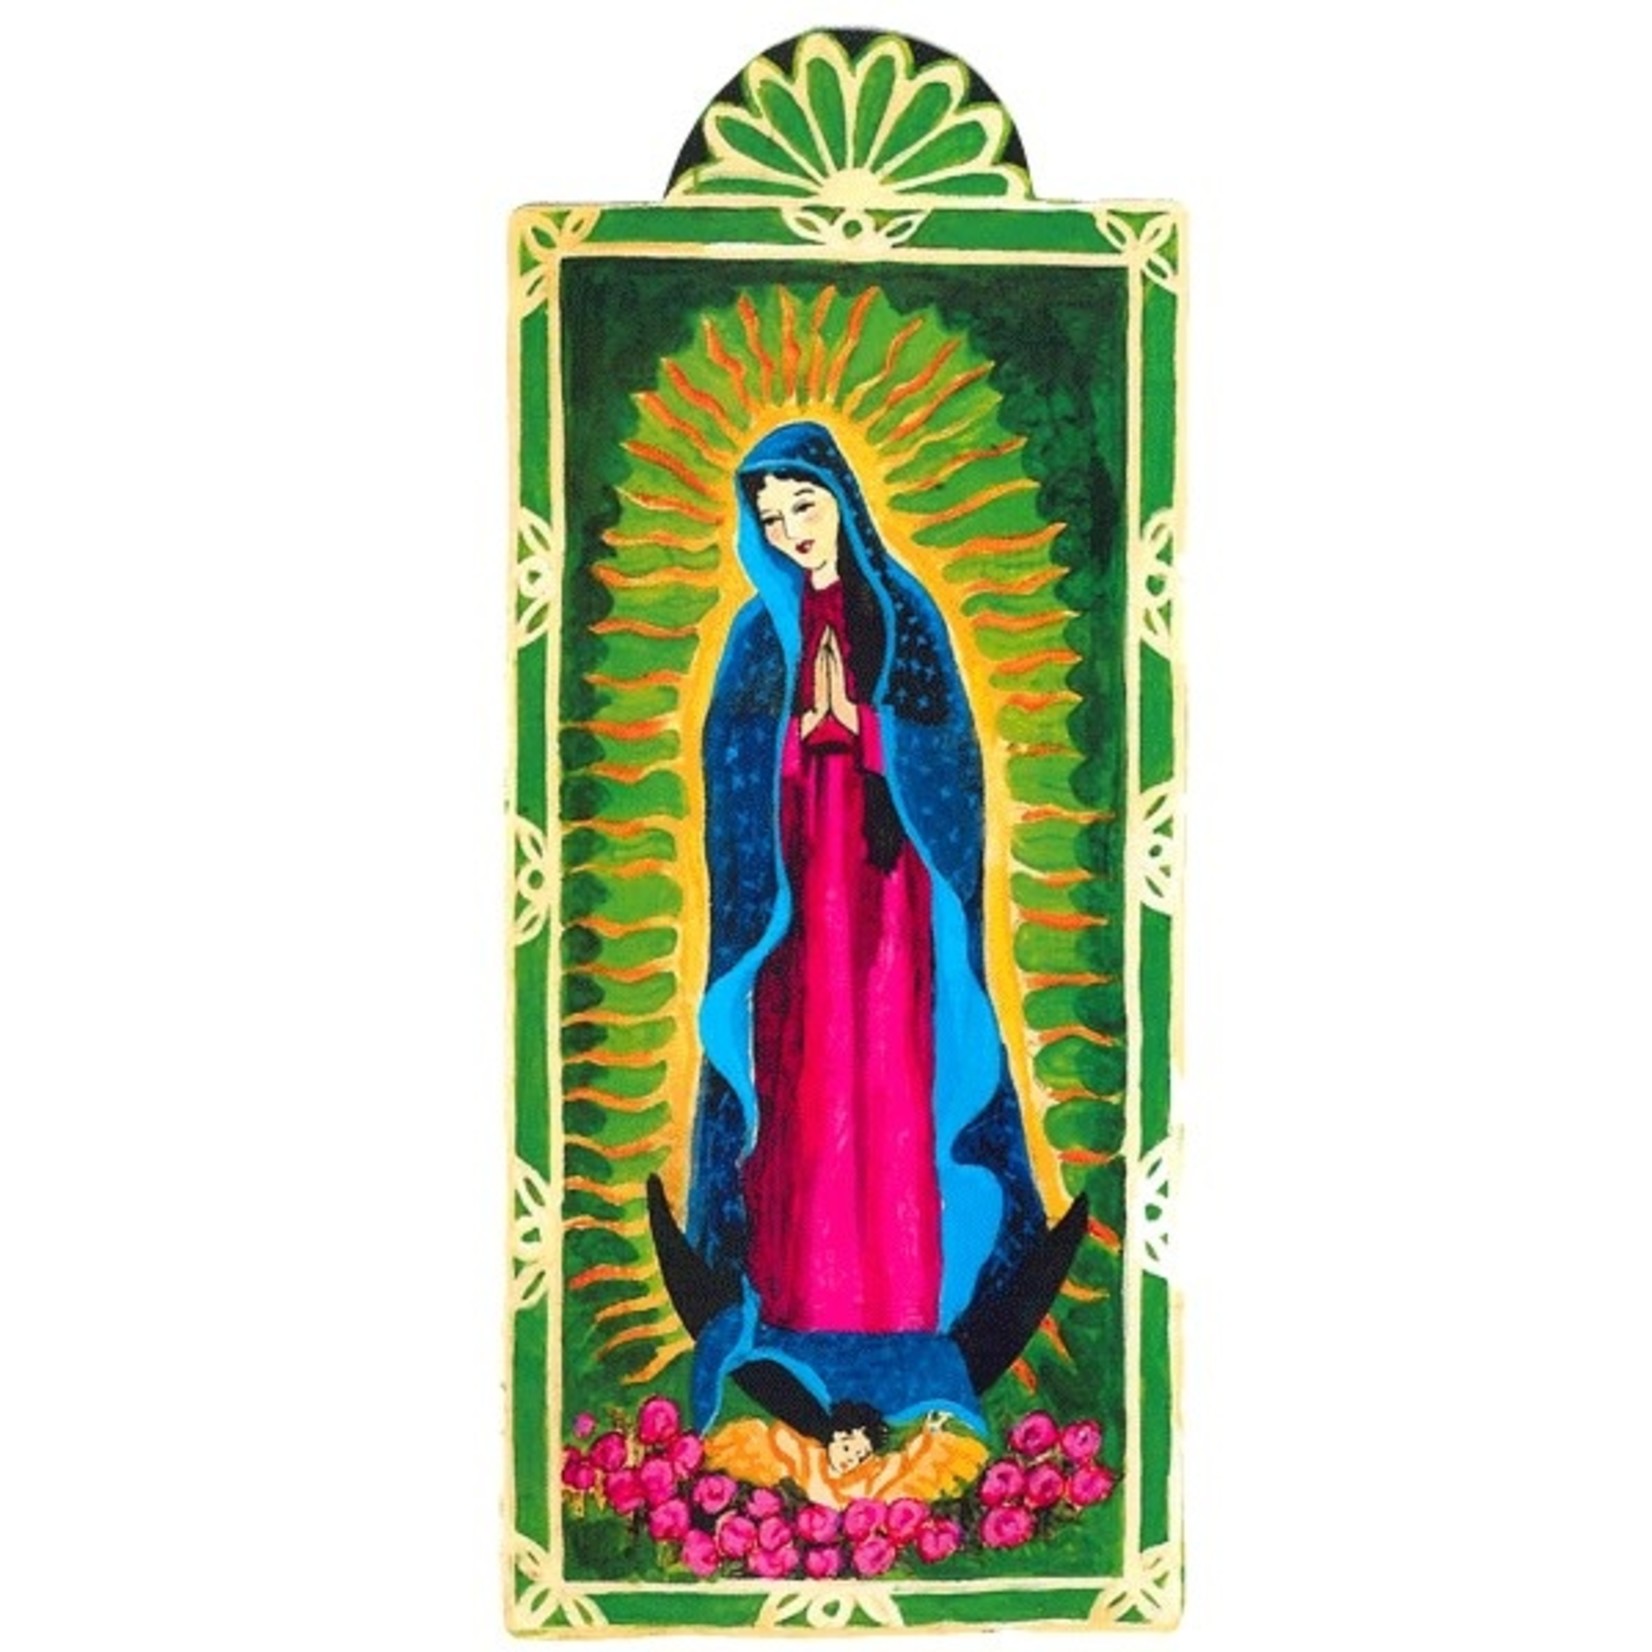 Retablo Guadalupe Green Pocket Saint